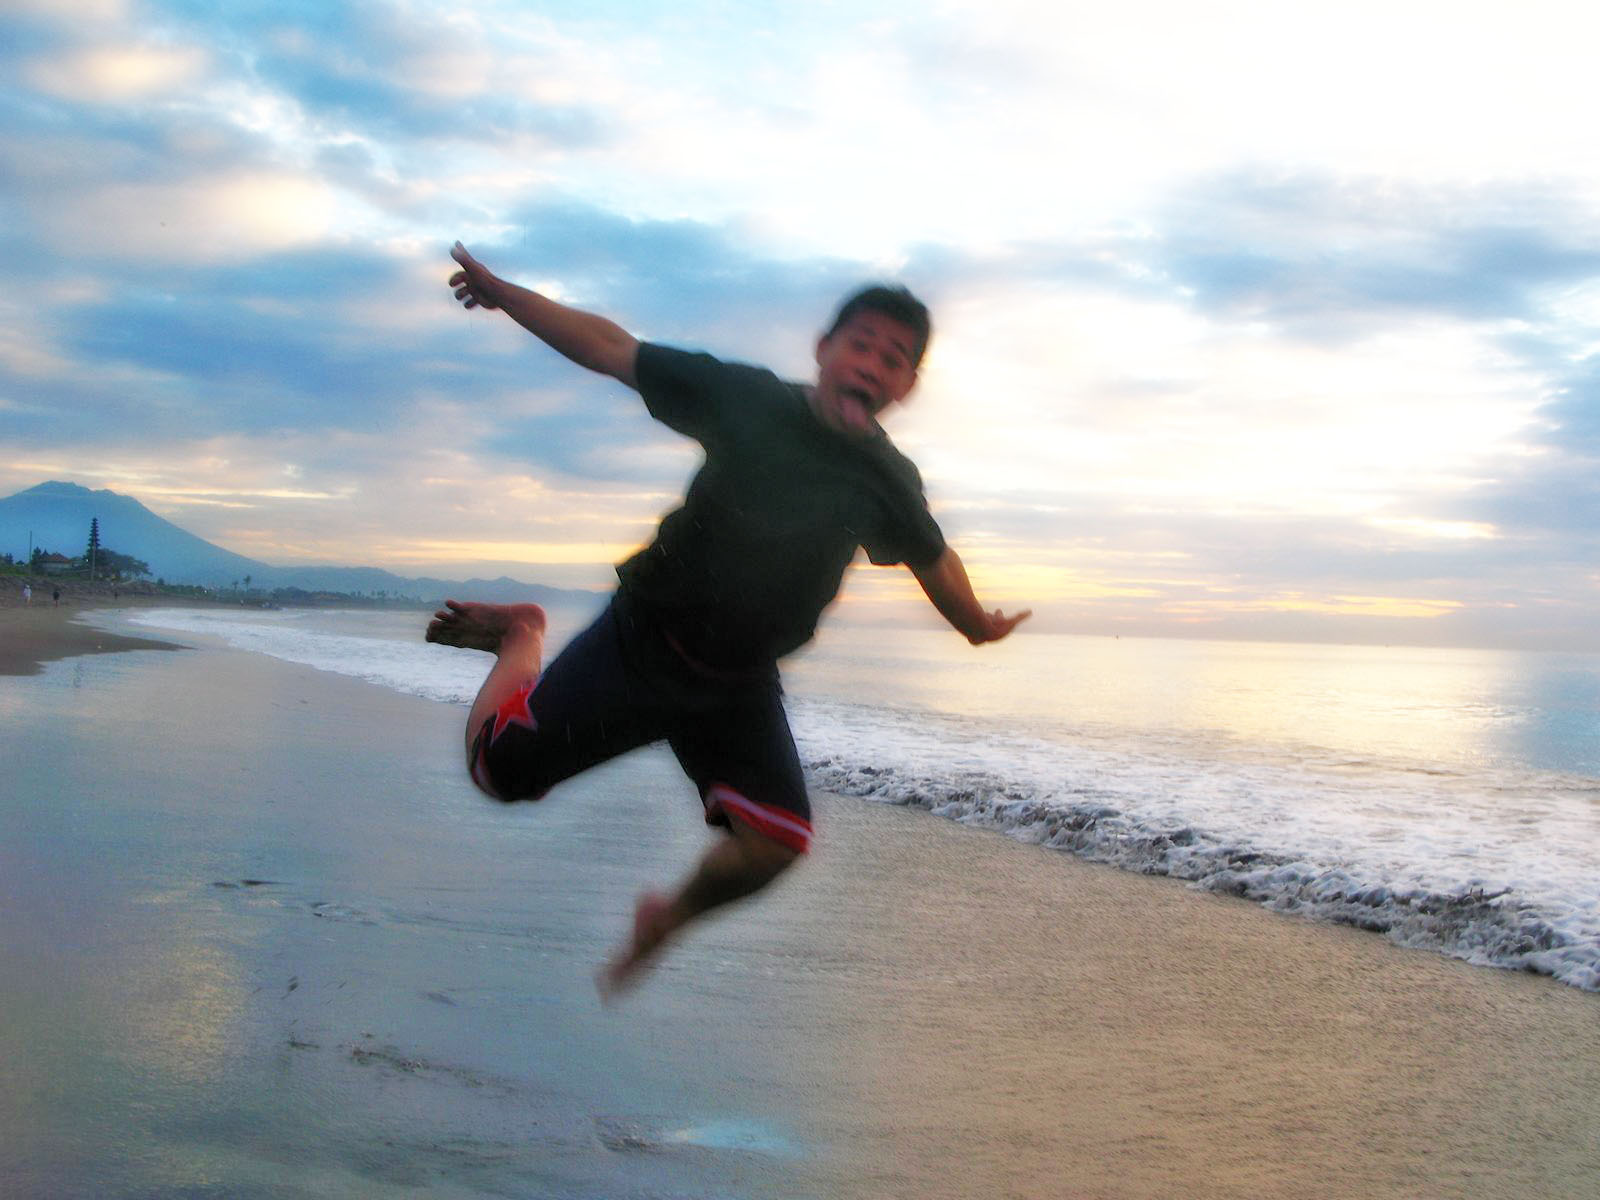 Jump to fly along the coast, Beach, Boy, Coast, Fly, HQ Photo